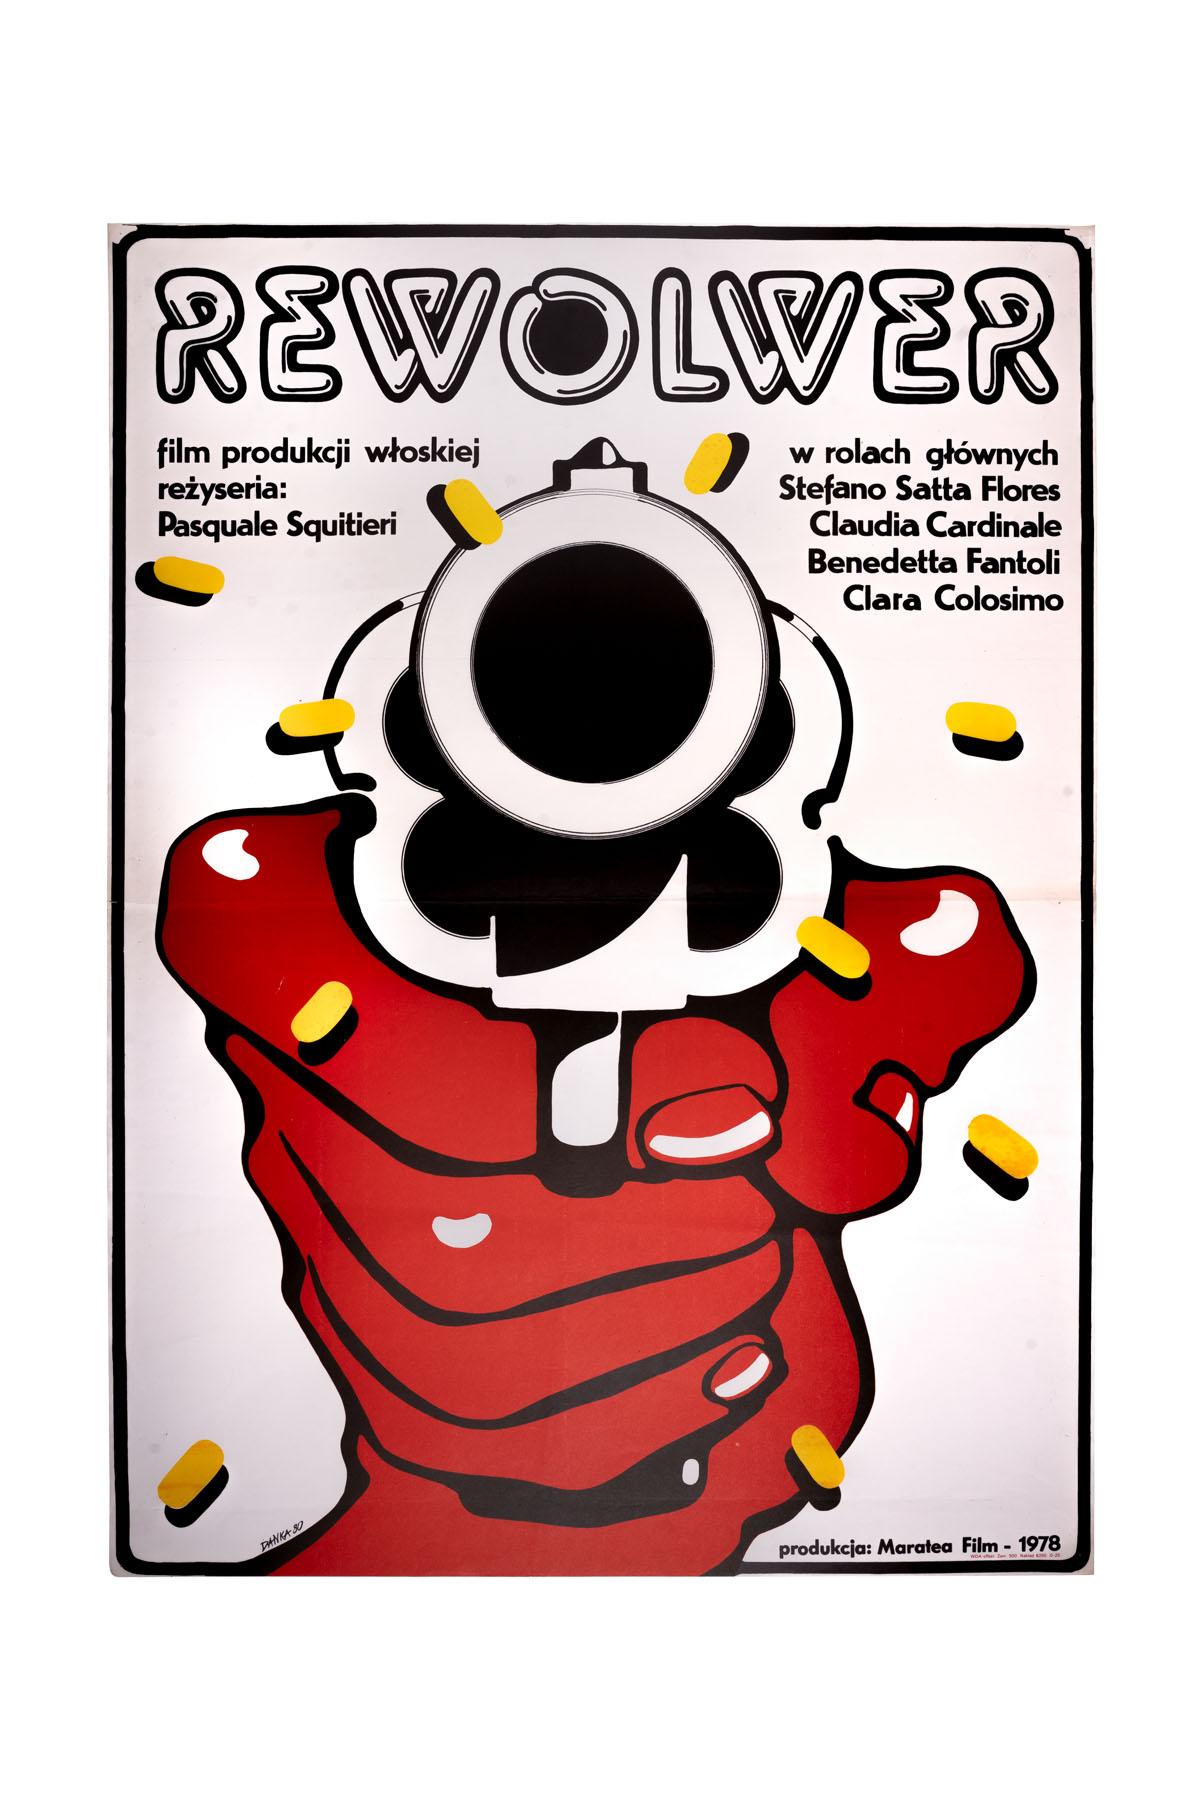 This original Sniper (Polish: 'Rewolwer') movie poster from 1980 was designed by Danuta Baginska-Andrejew (Danka).
  